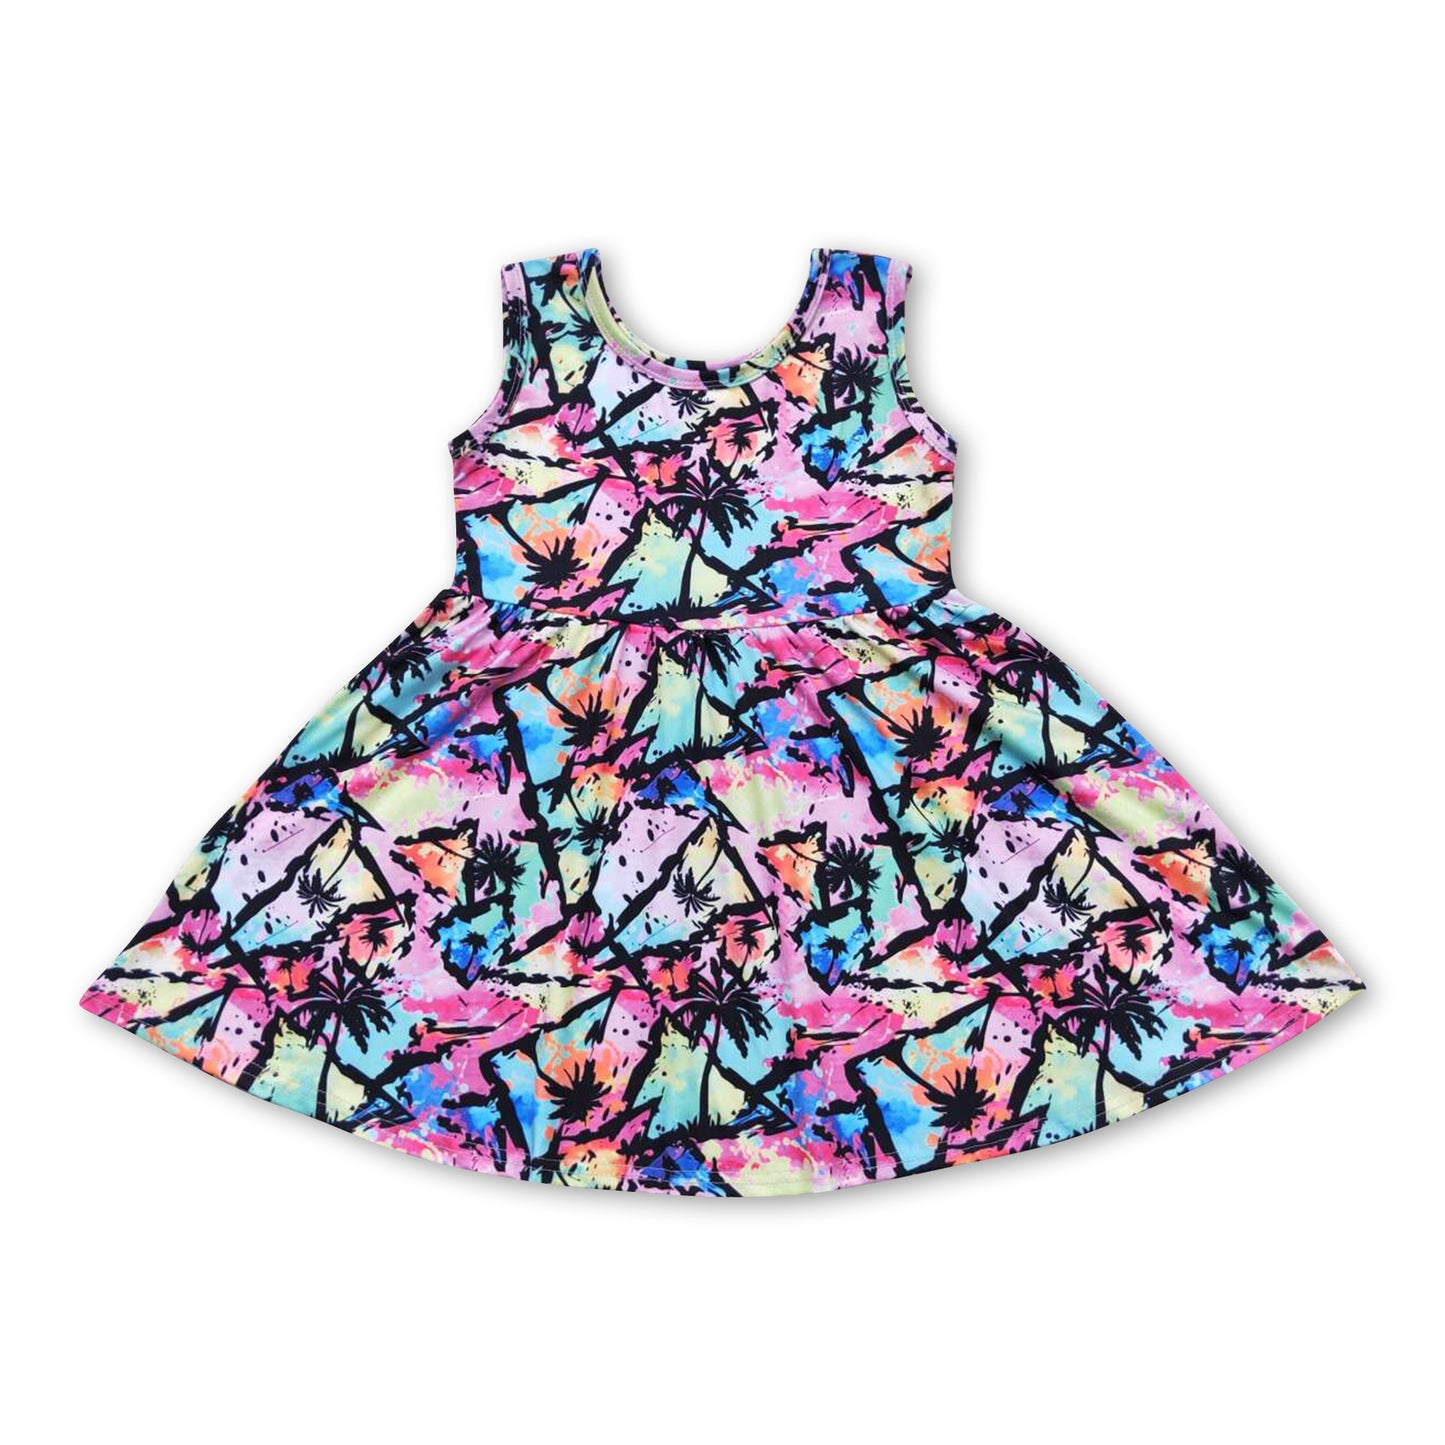 Sleeveless tie dye beach girls summer dresses